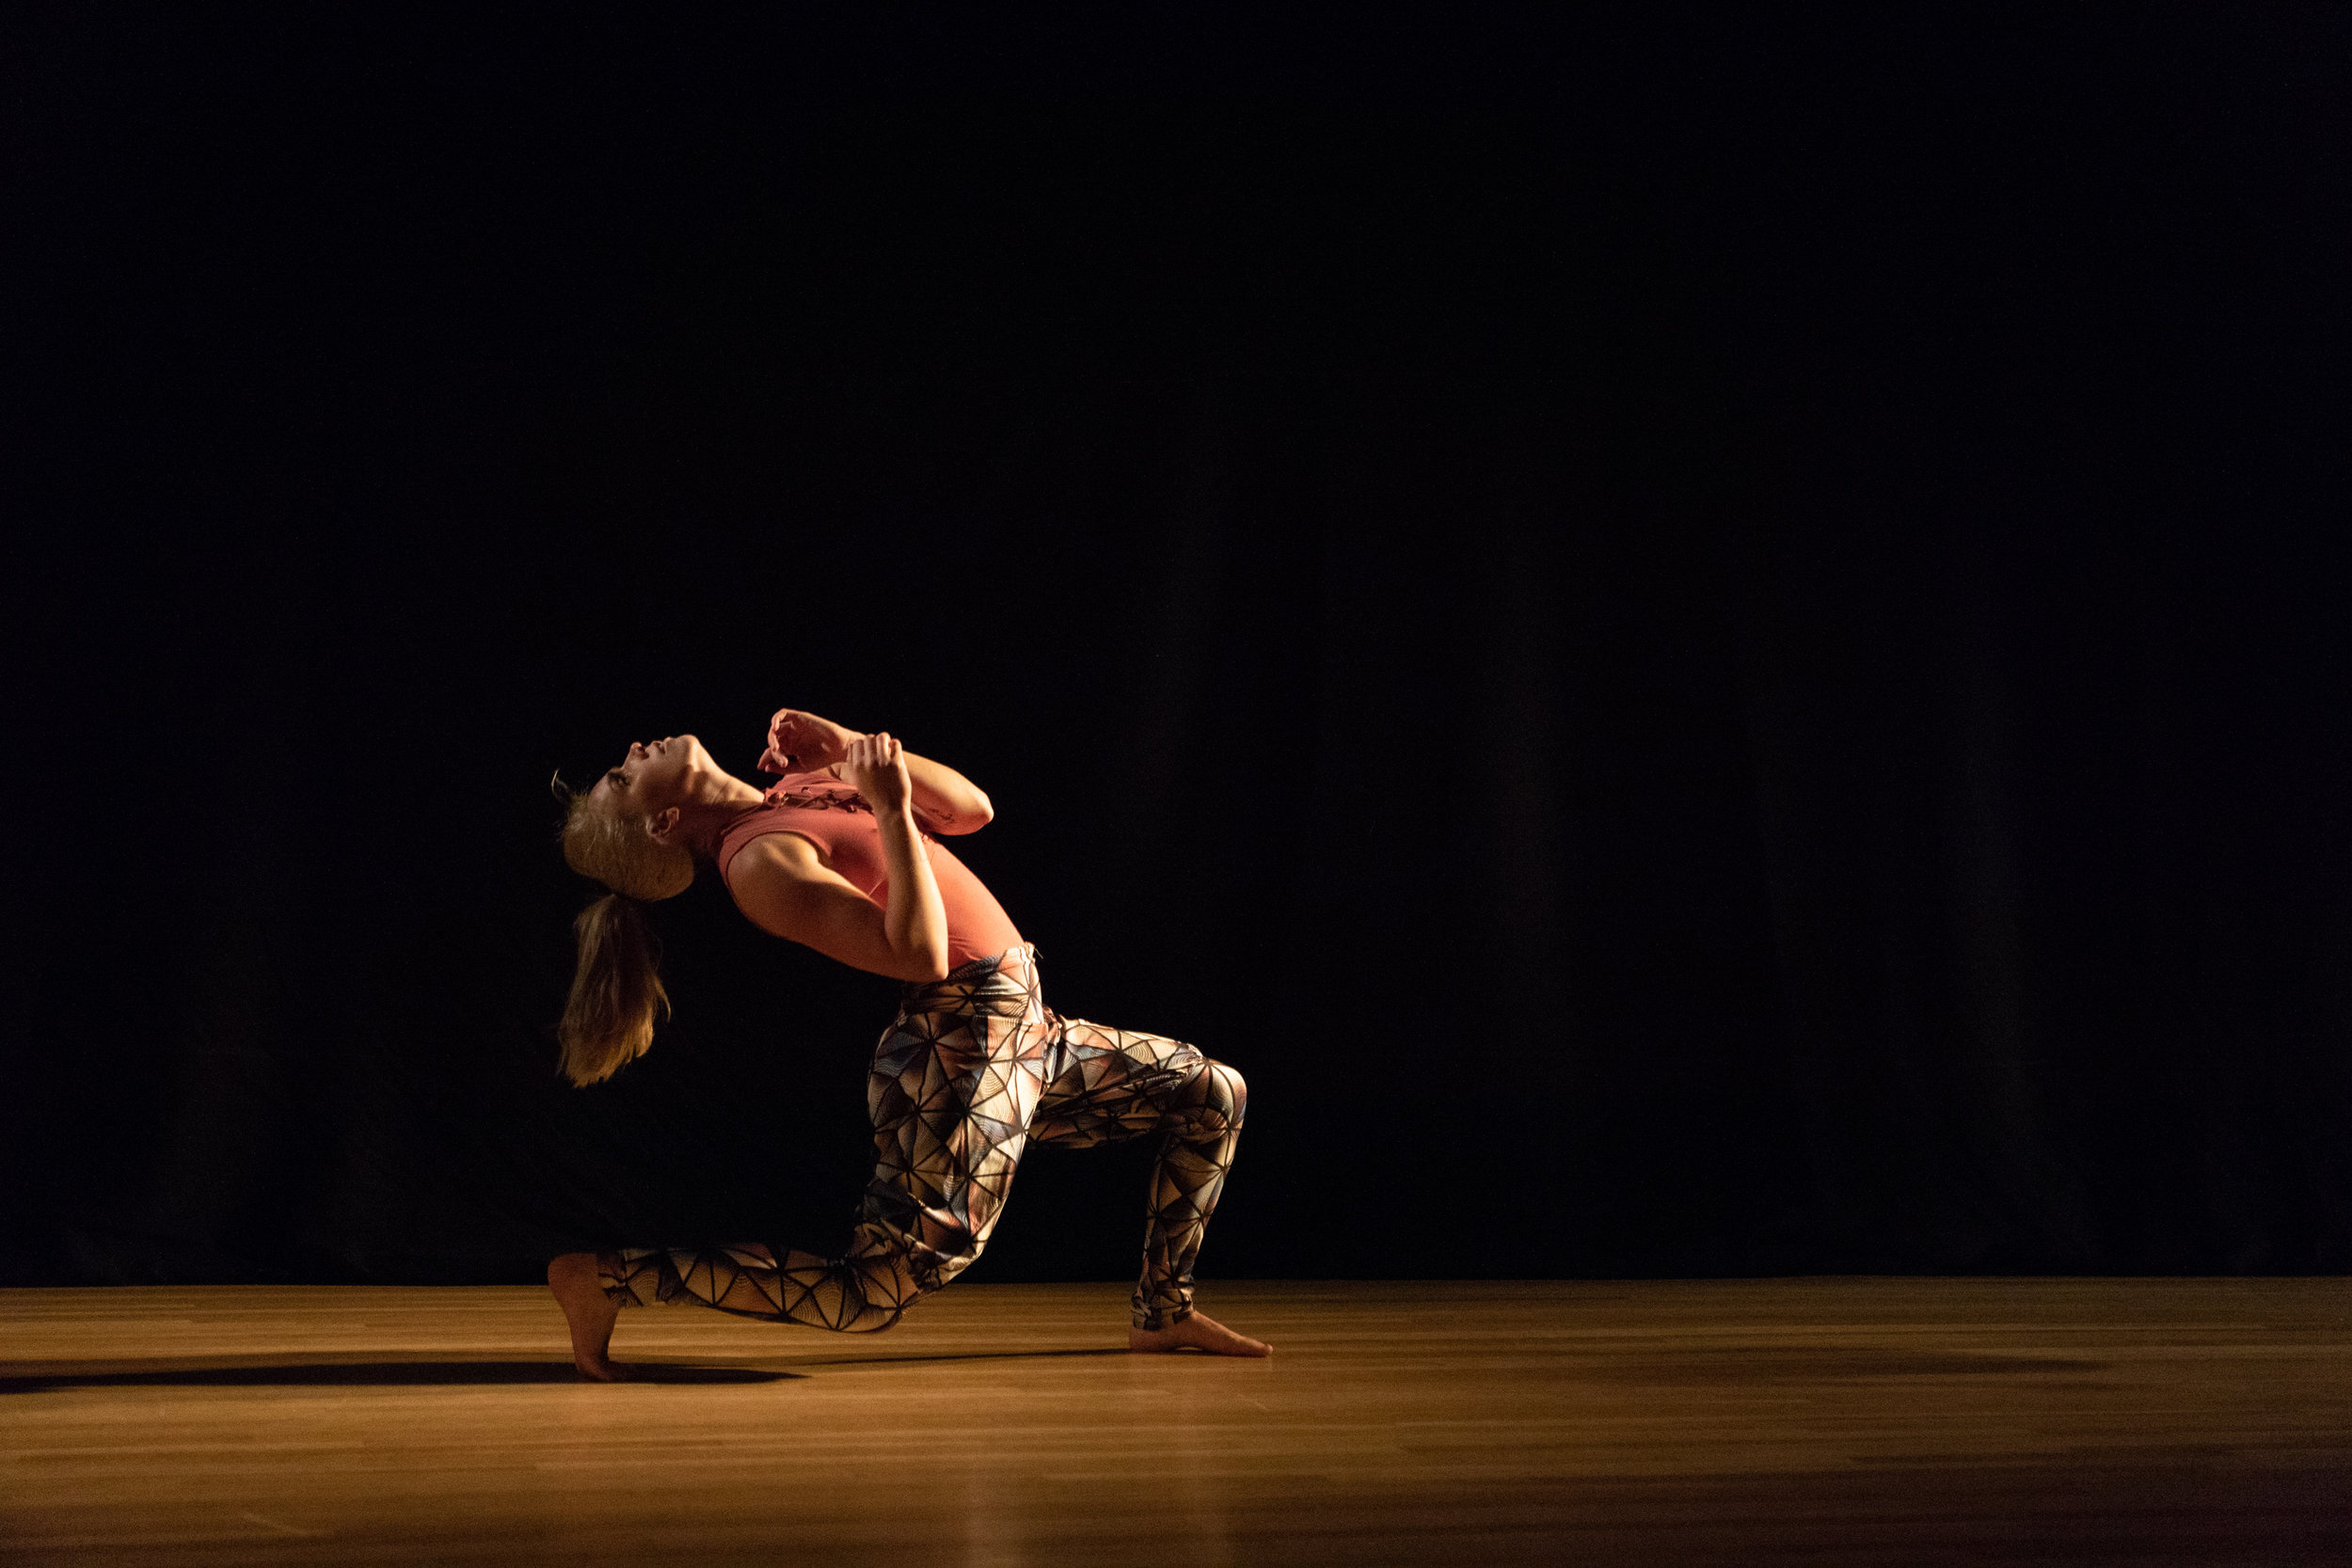    Choreograper:    Joseph Heitman     Dancer:    Dana Mazurowski    Photo by Joseph Heitman of One Day Dance  